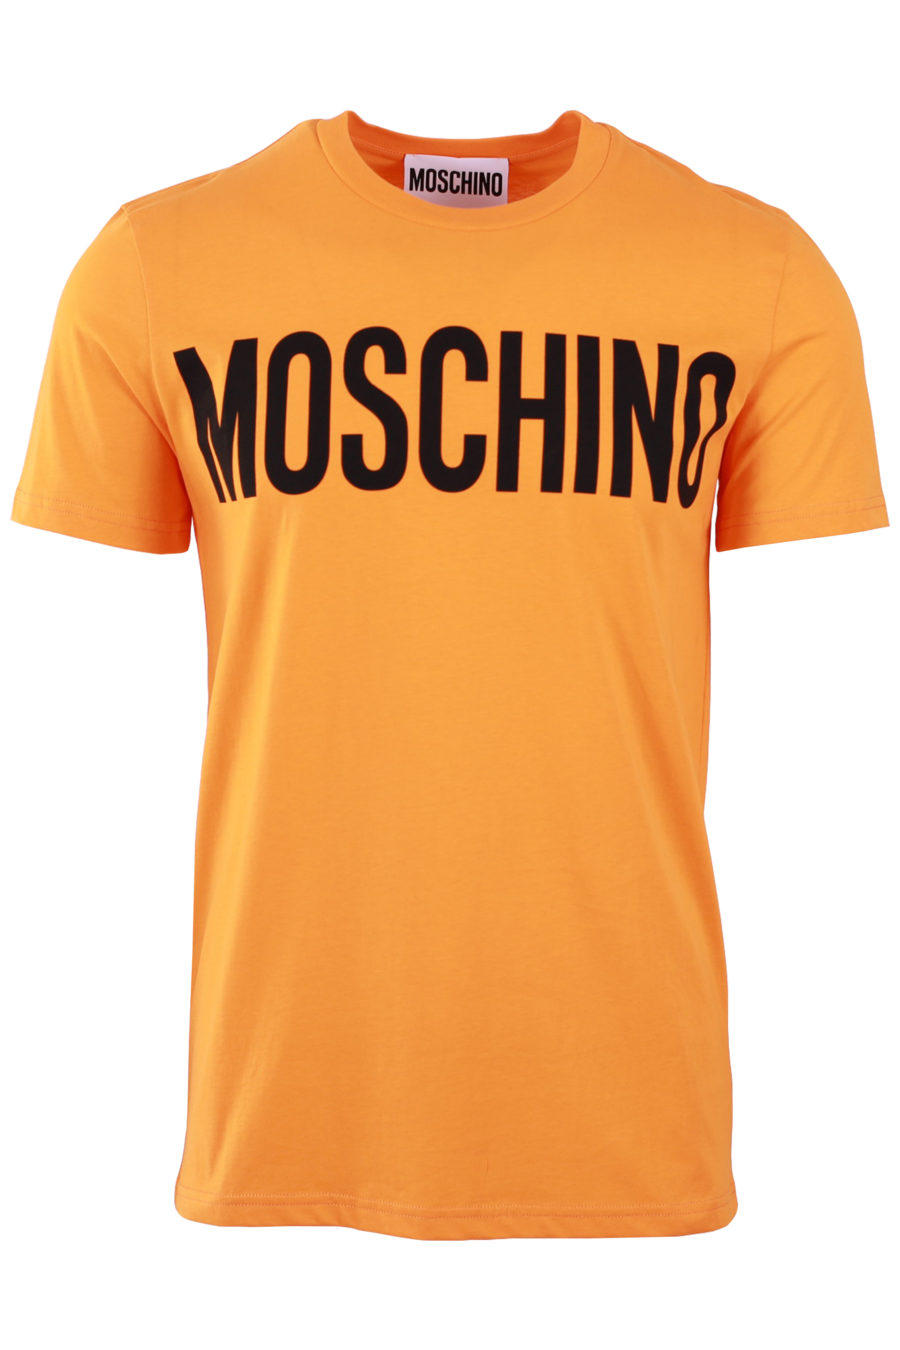 Camiseta naranja con logo negro - 2339749be0b32d79c2e7fda1faecea9cf643e24e